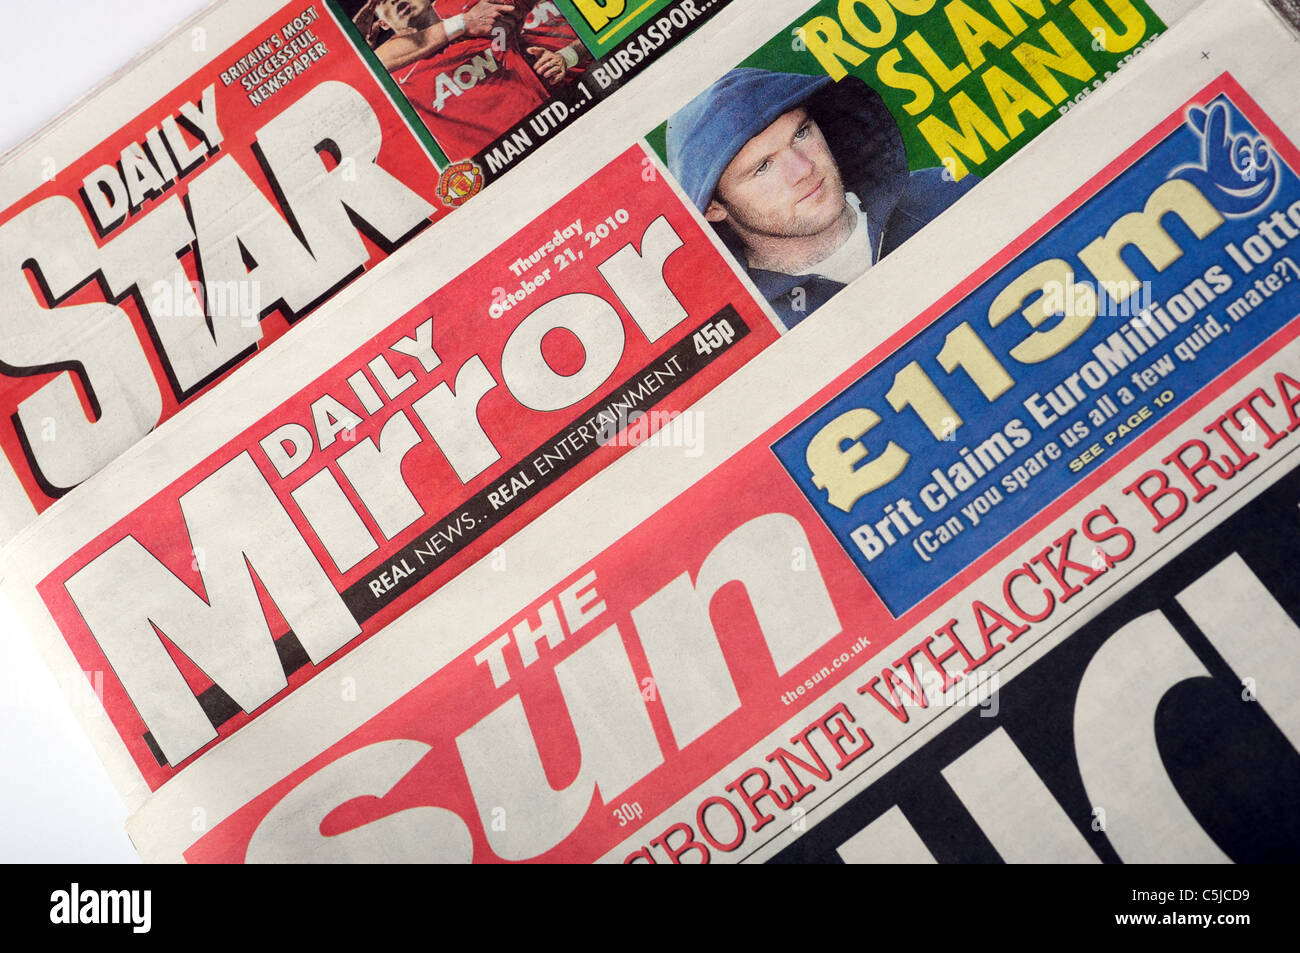 British tabloid newspapers Stock Photo